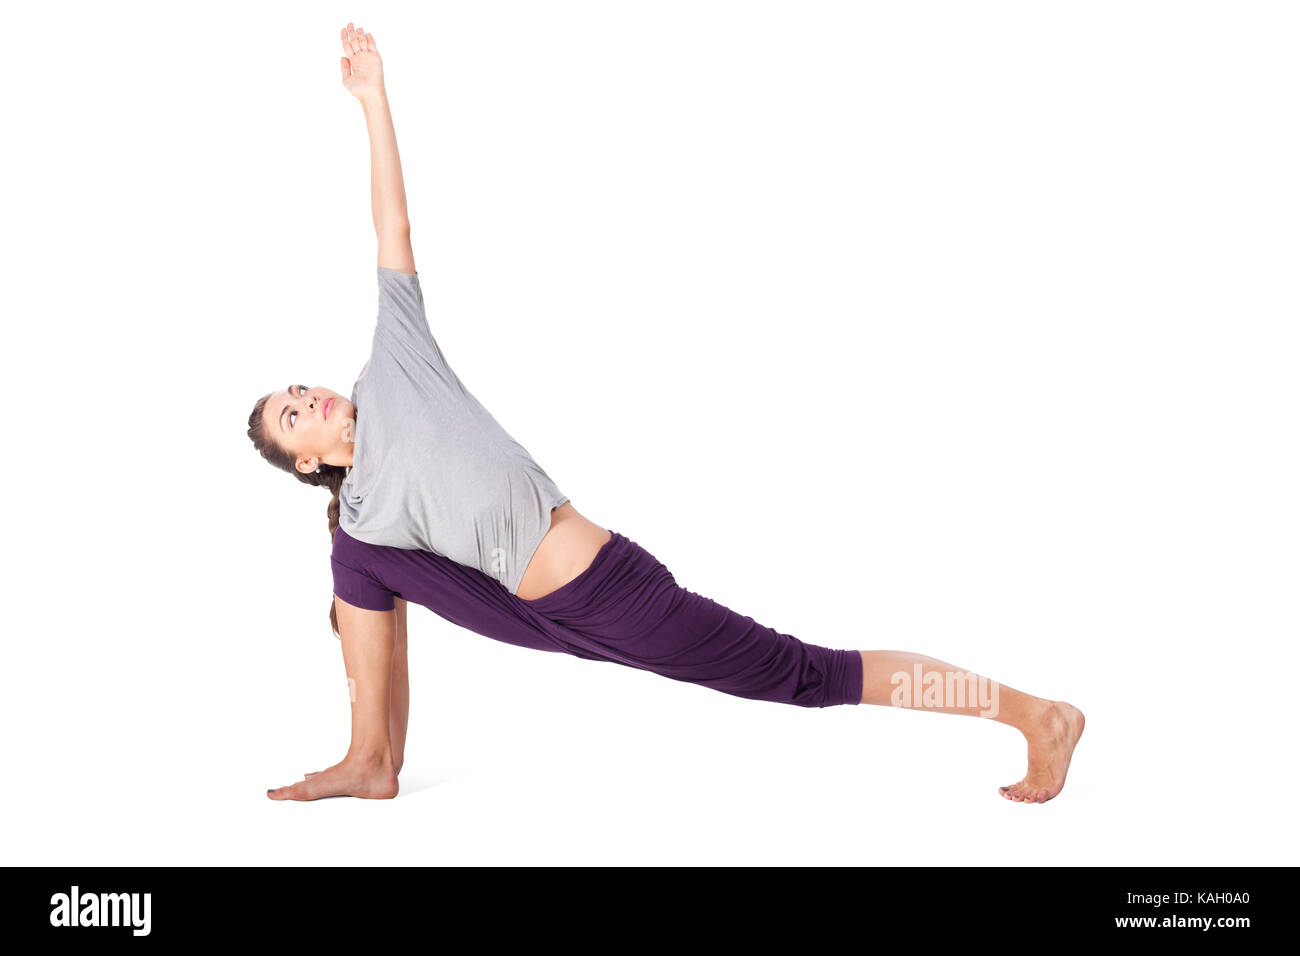 Yoga Pose: Extended Side Angle | Pocket Yoga